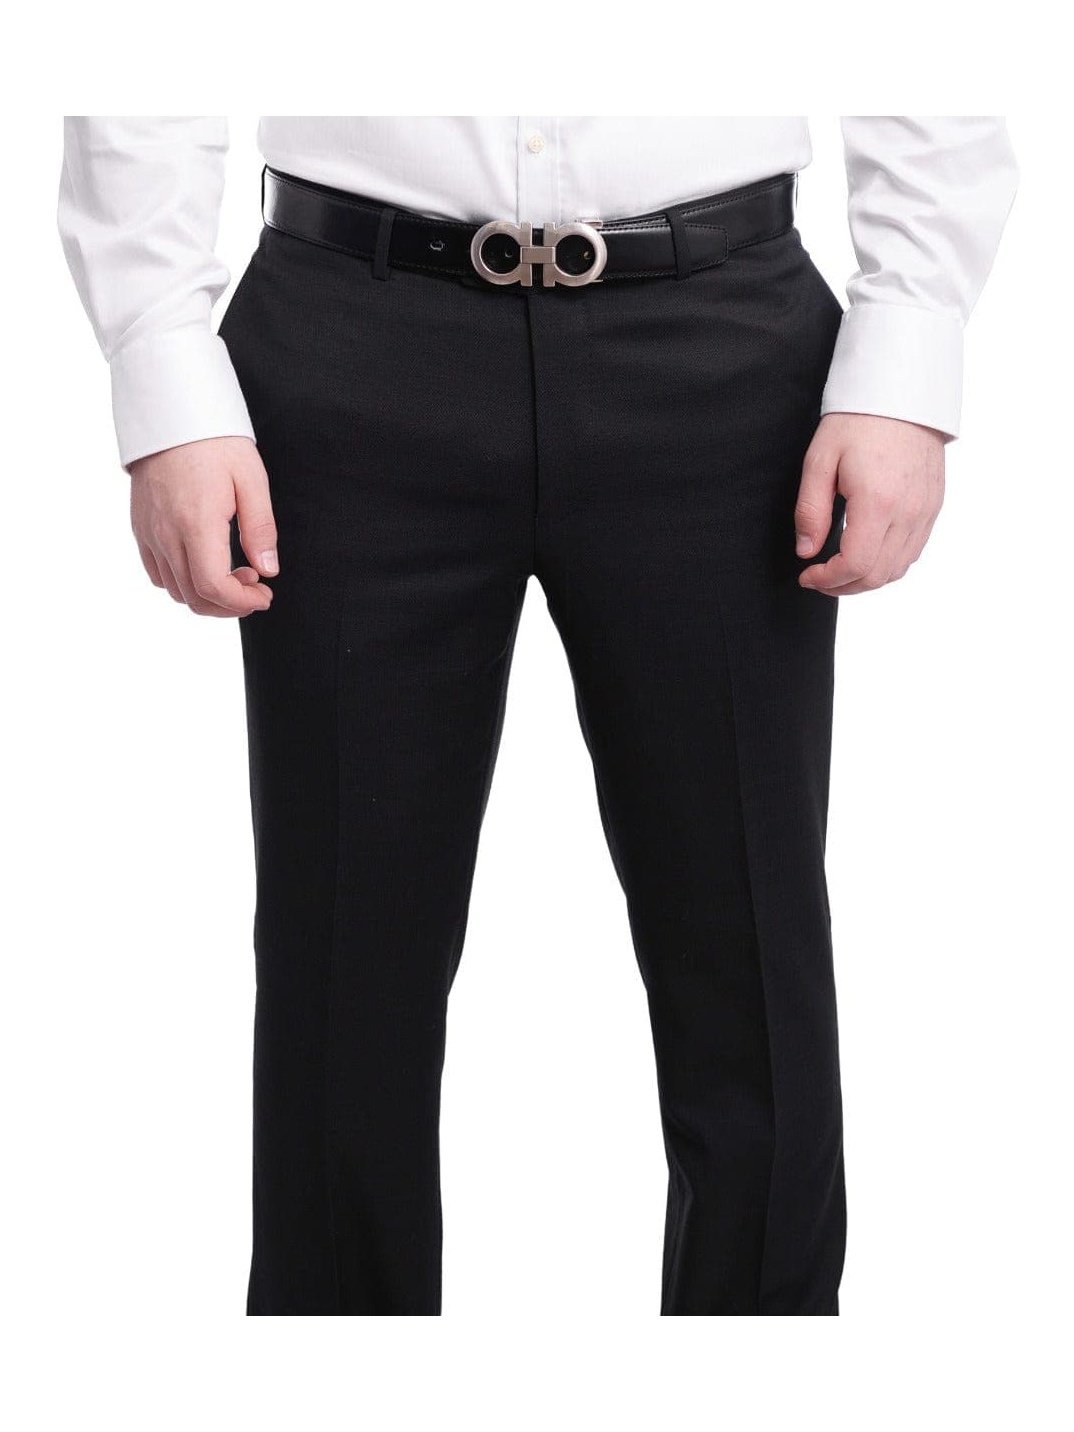 Napoli Slim Fit Black Textured Flat Front Wool Dress Pants - The Suit Depot